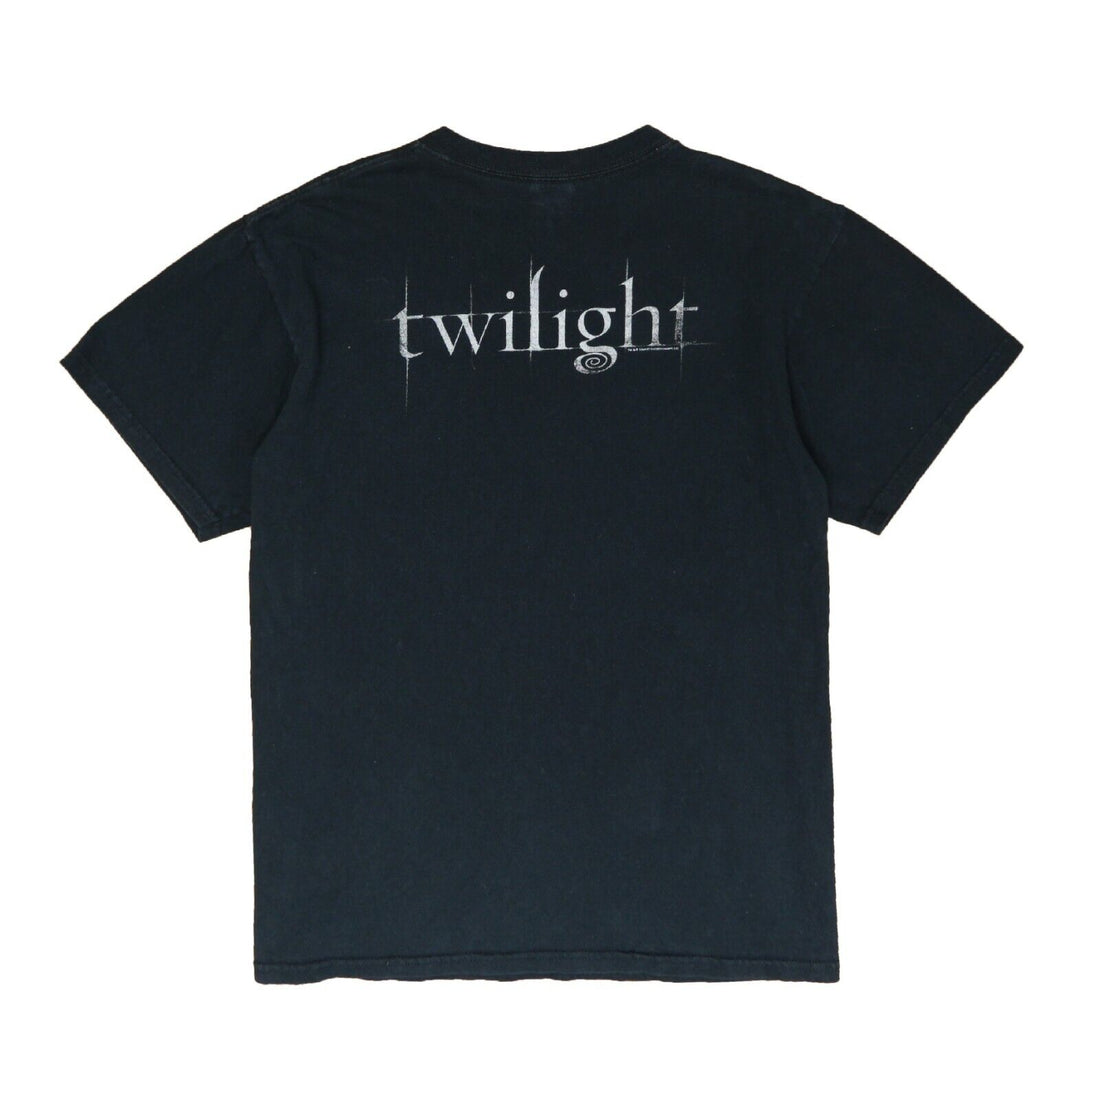 Vintage Edward Cullen Twilight Anvil T-Shirt Size Large Black Movie Promo